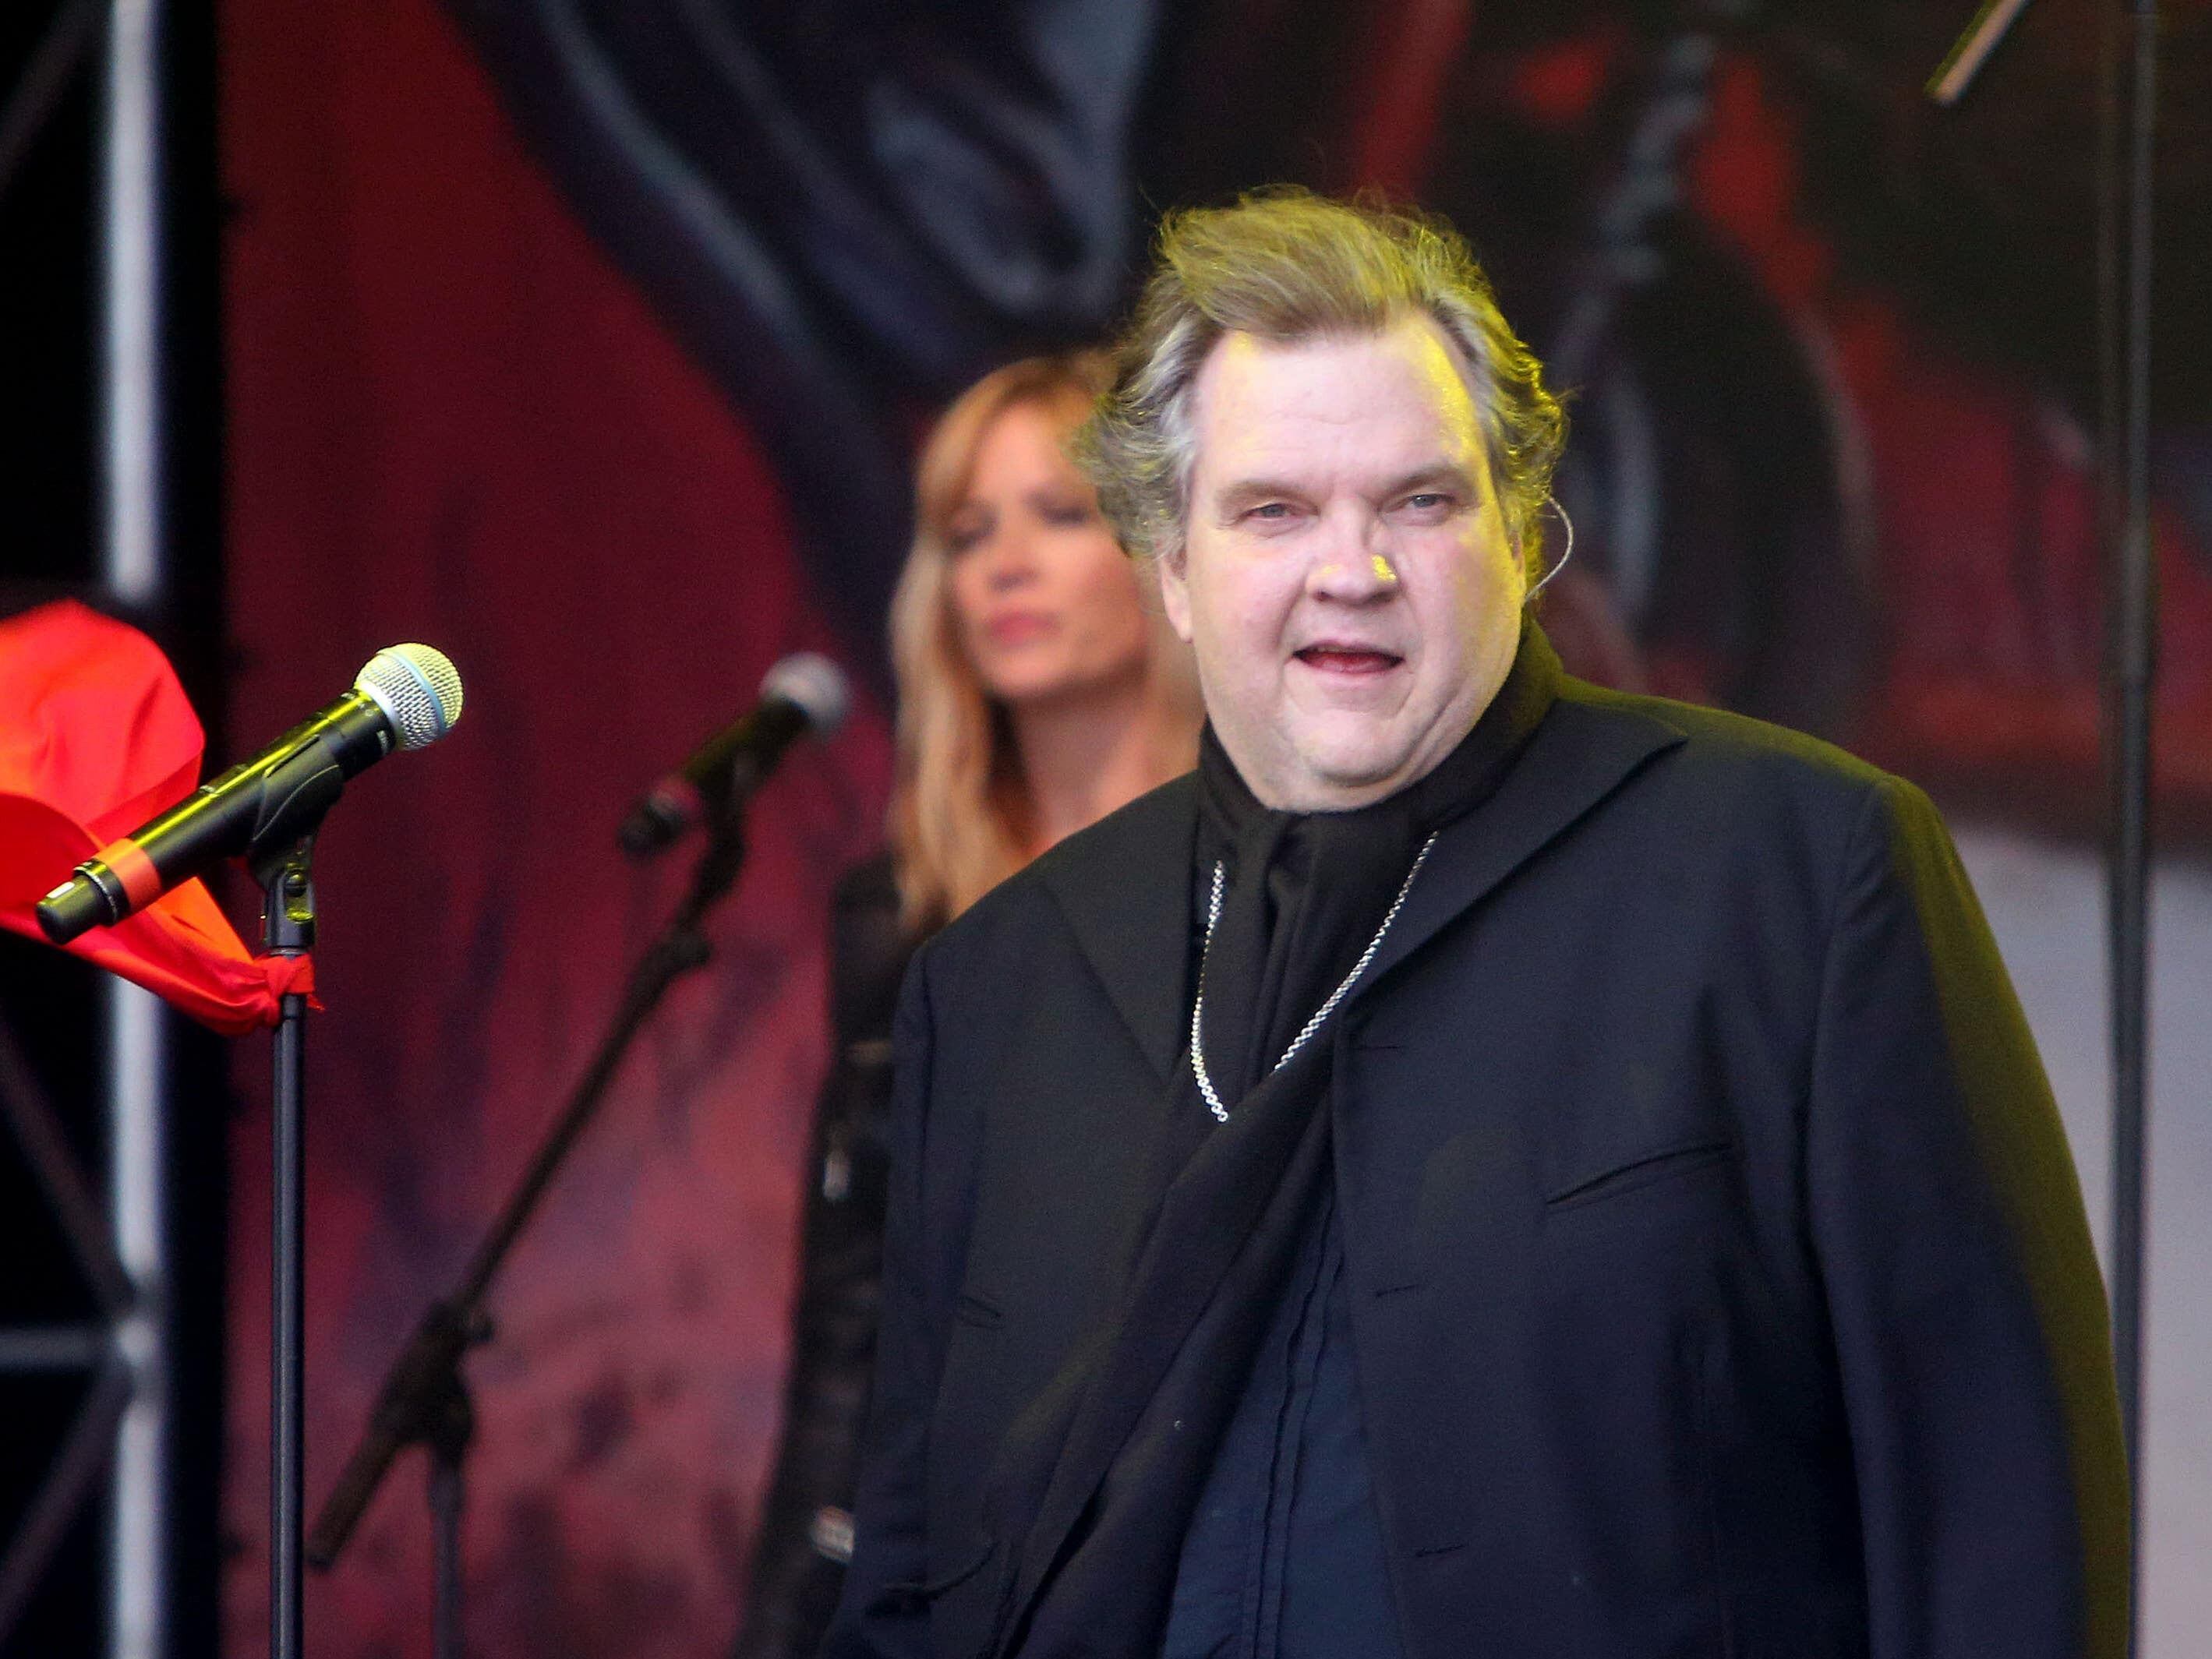 String of Meat Loaf albums set to re-enter UK chart following singer’s death